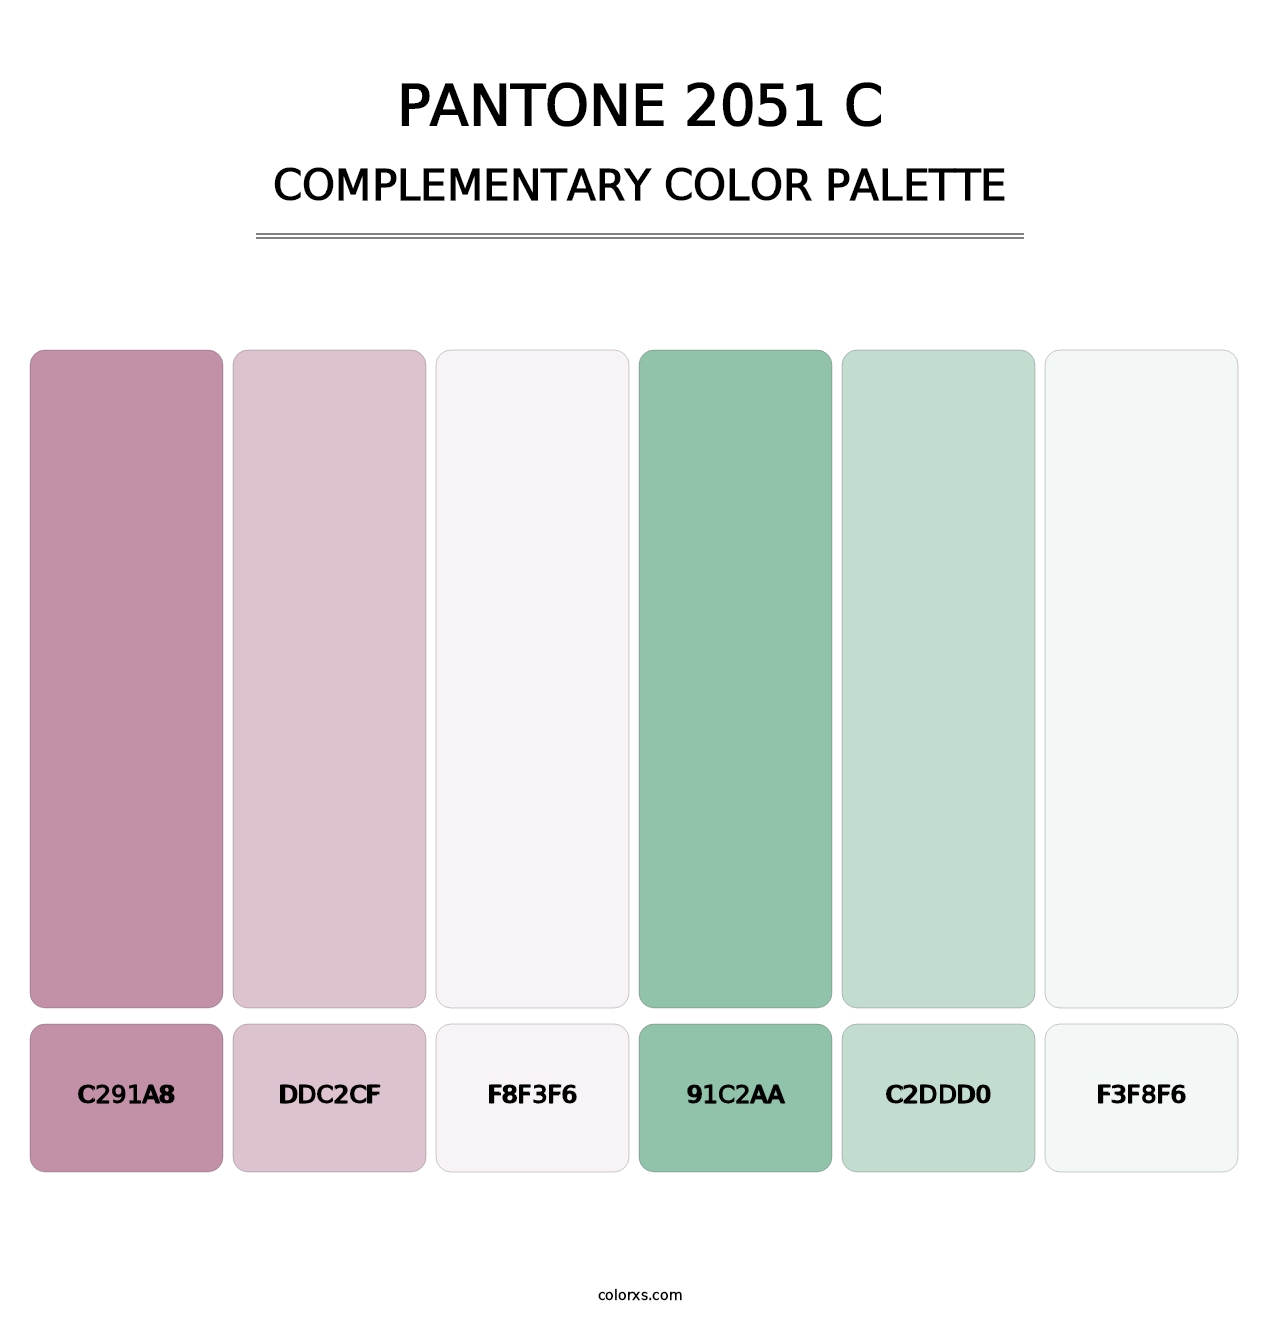 PANTONE 2051 C - Complementary Color Palette